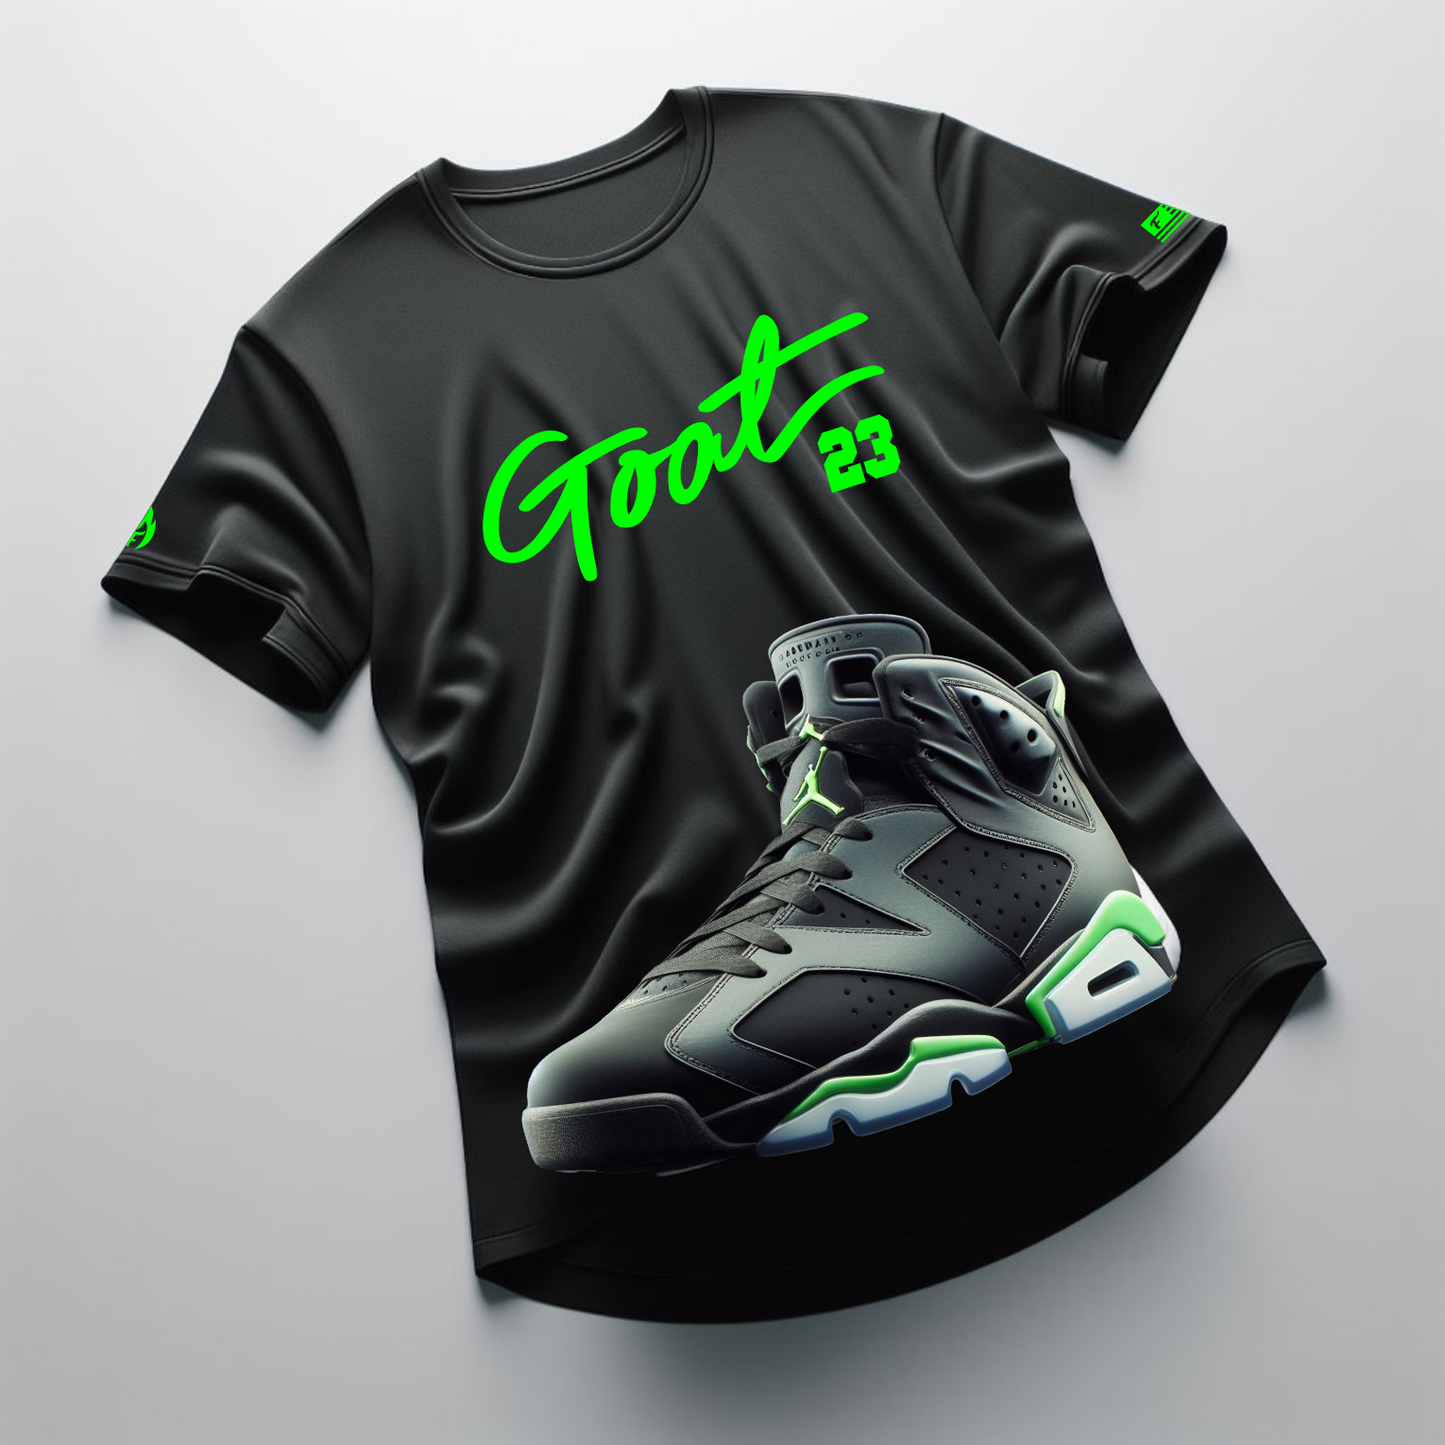 Goat 23 T-Shirt To Match Air Jordan Retro 6 Electric Green Black Sneaker Tees